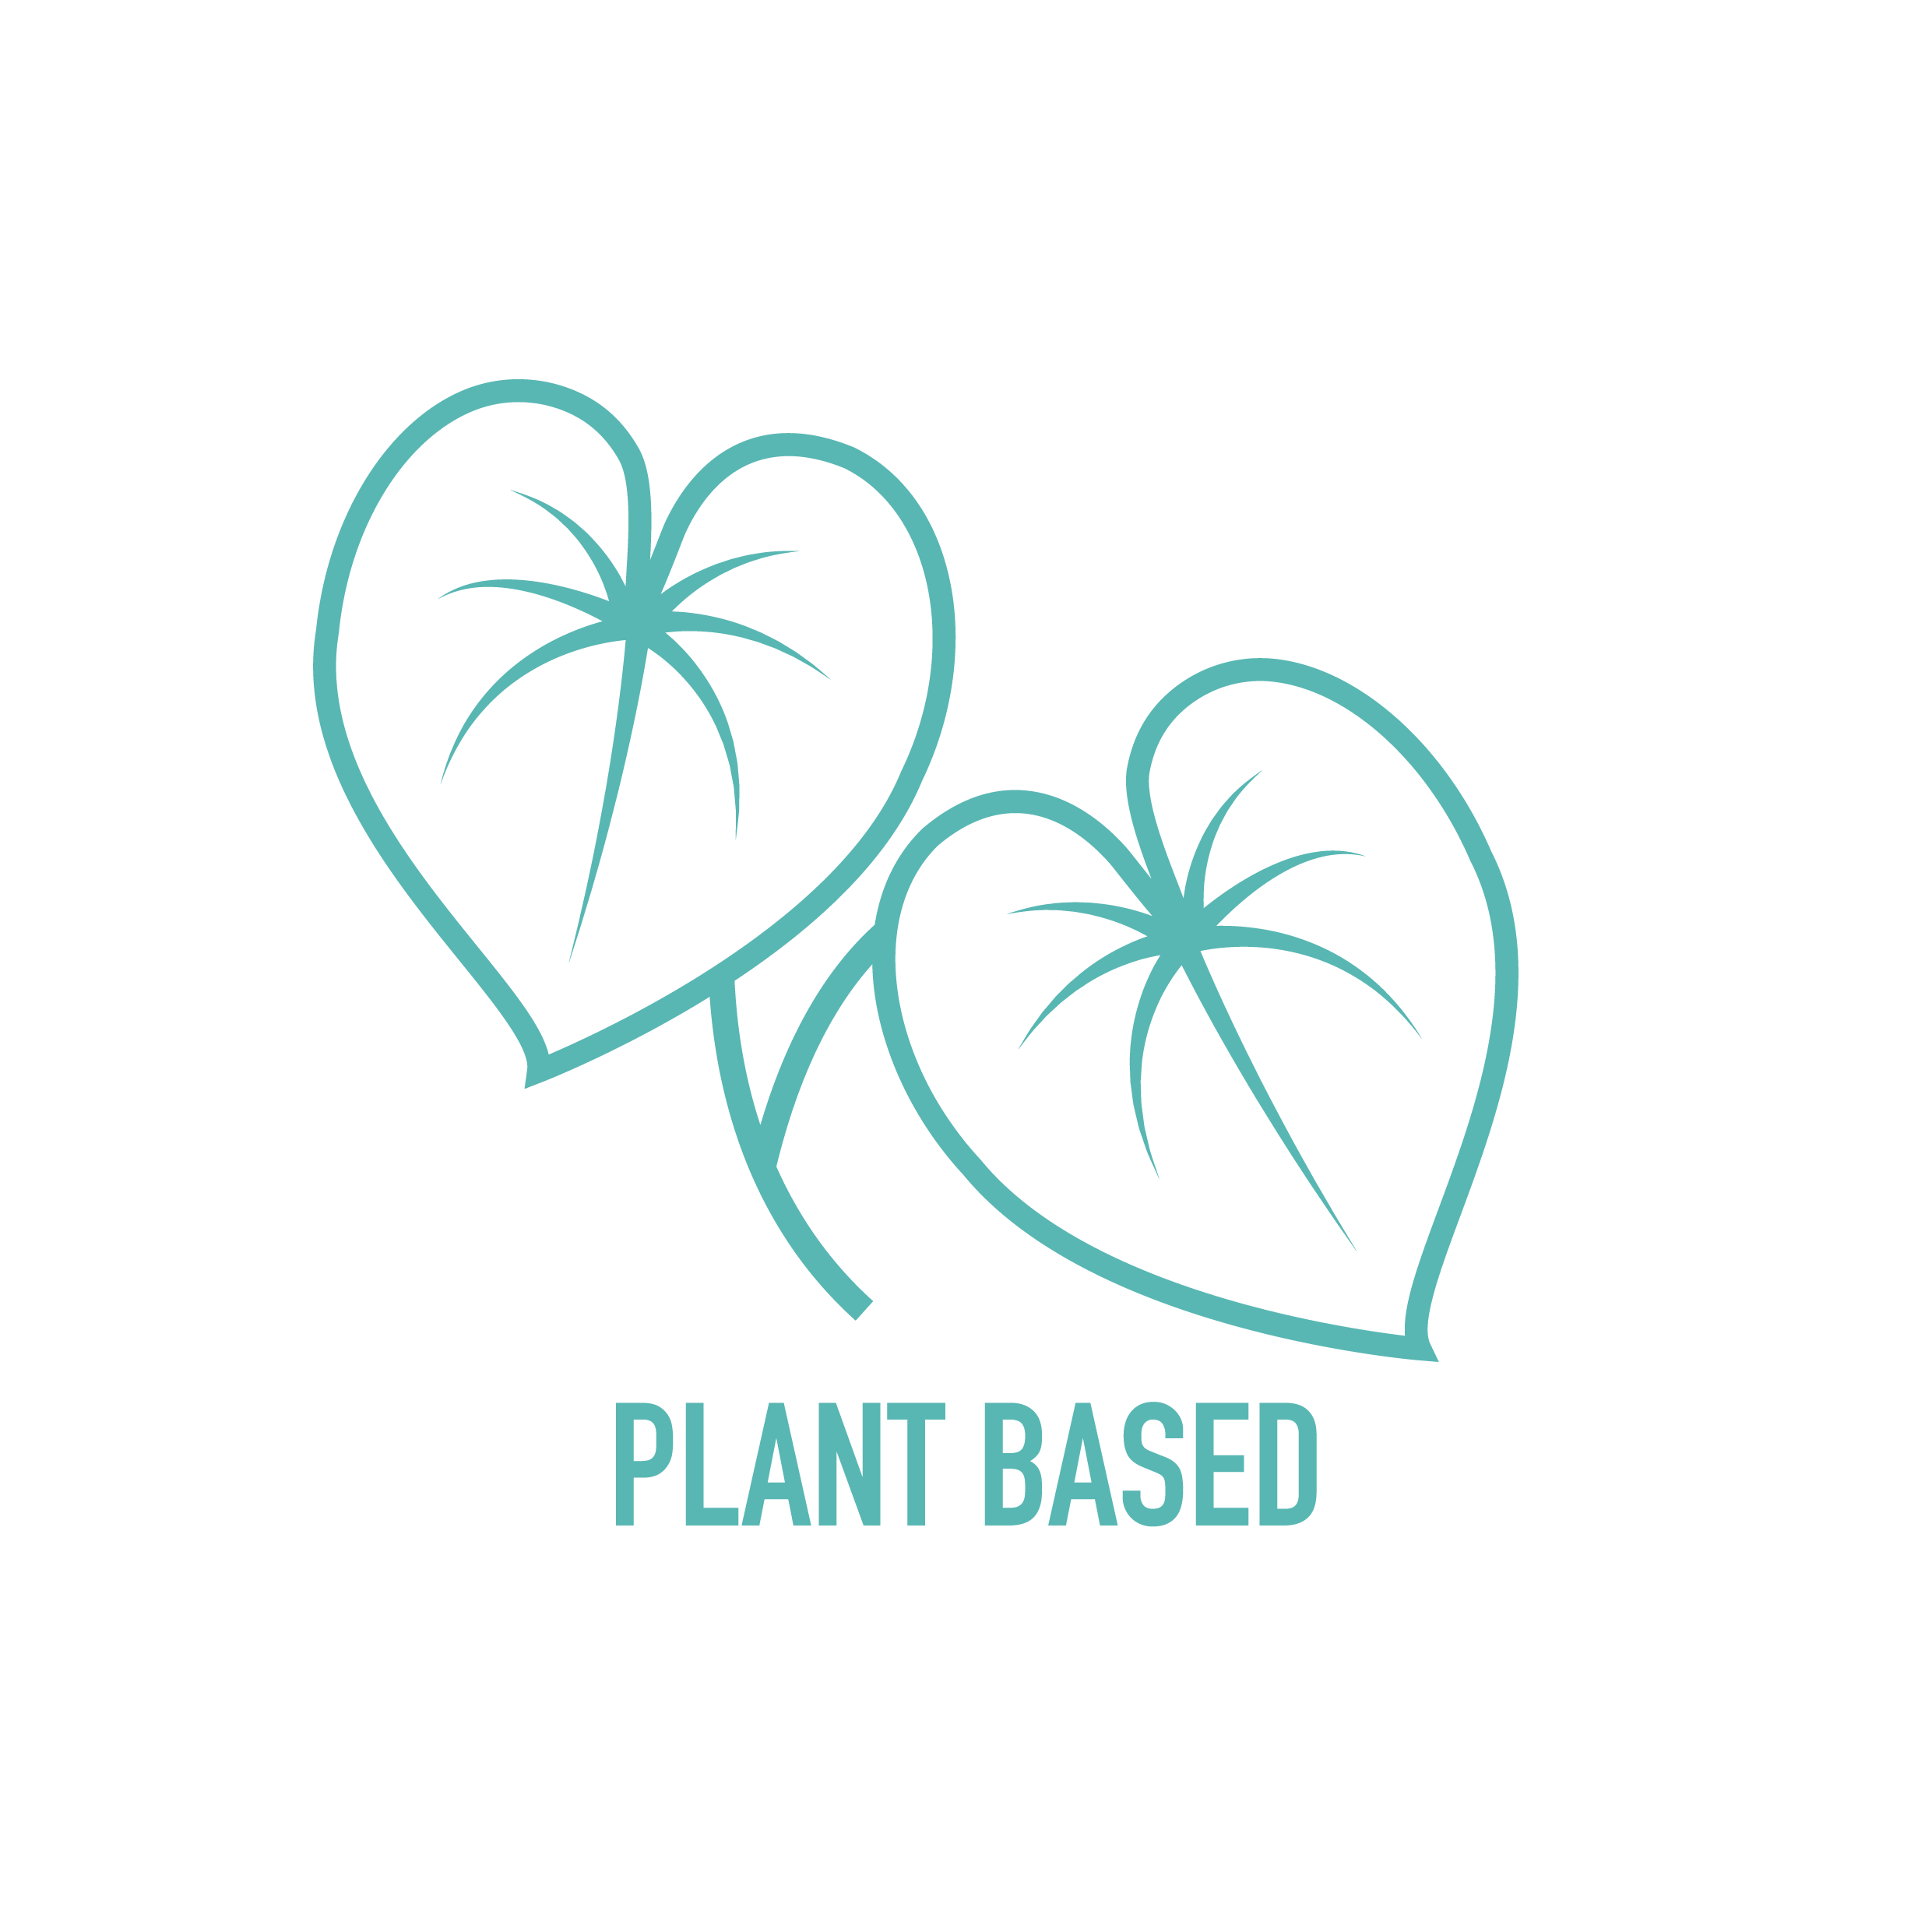 Plant based